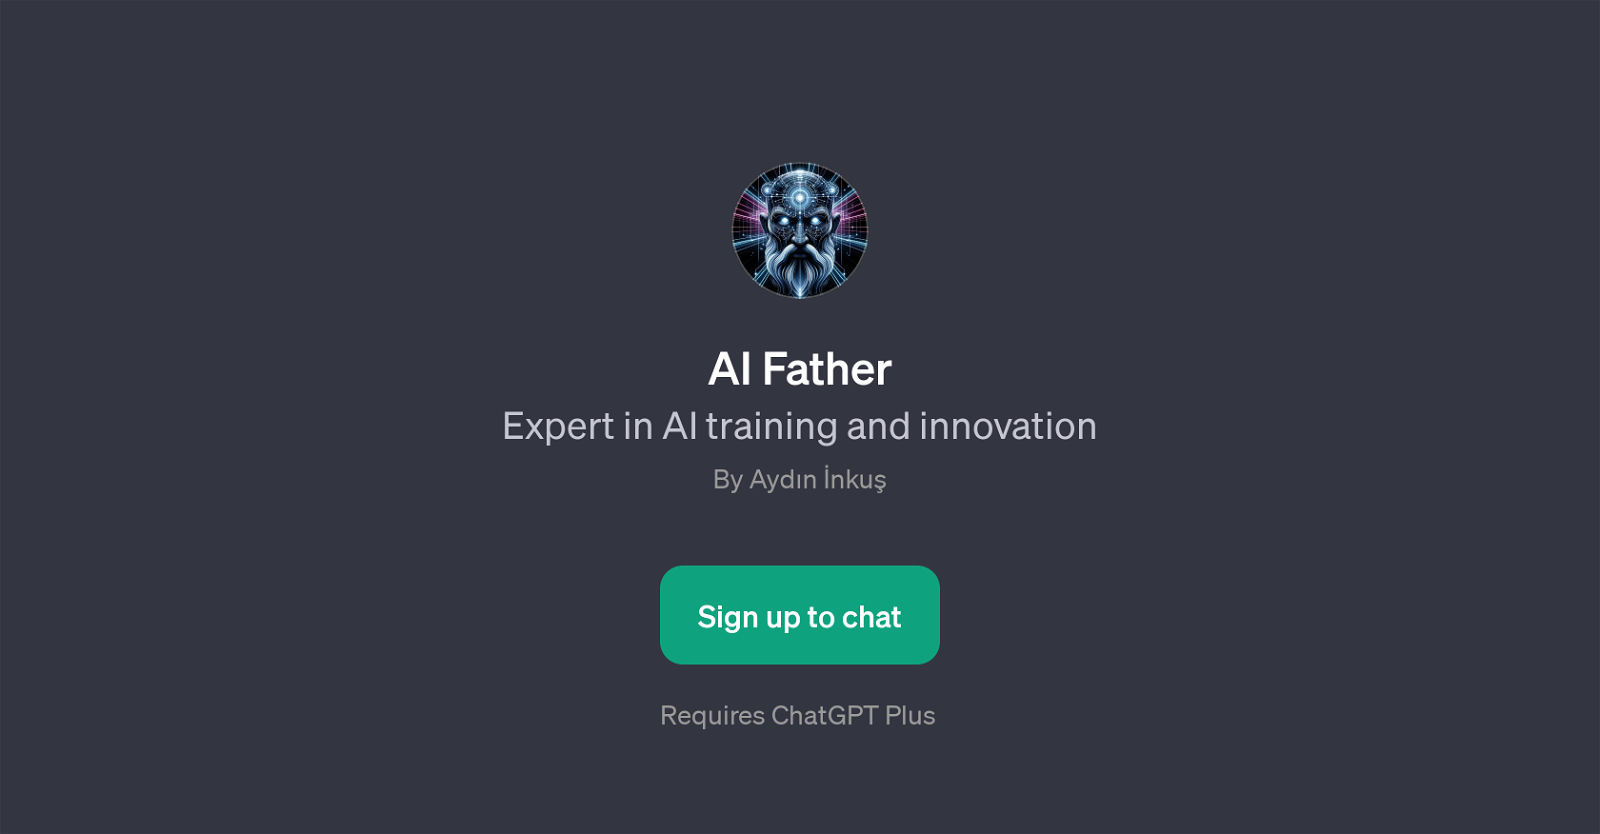 AI Father website